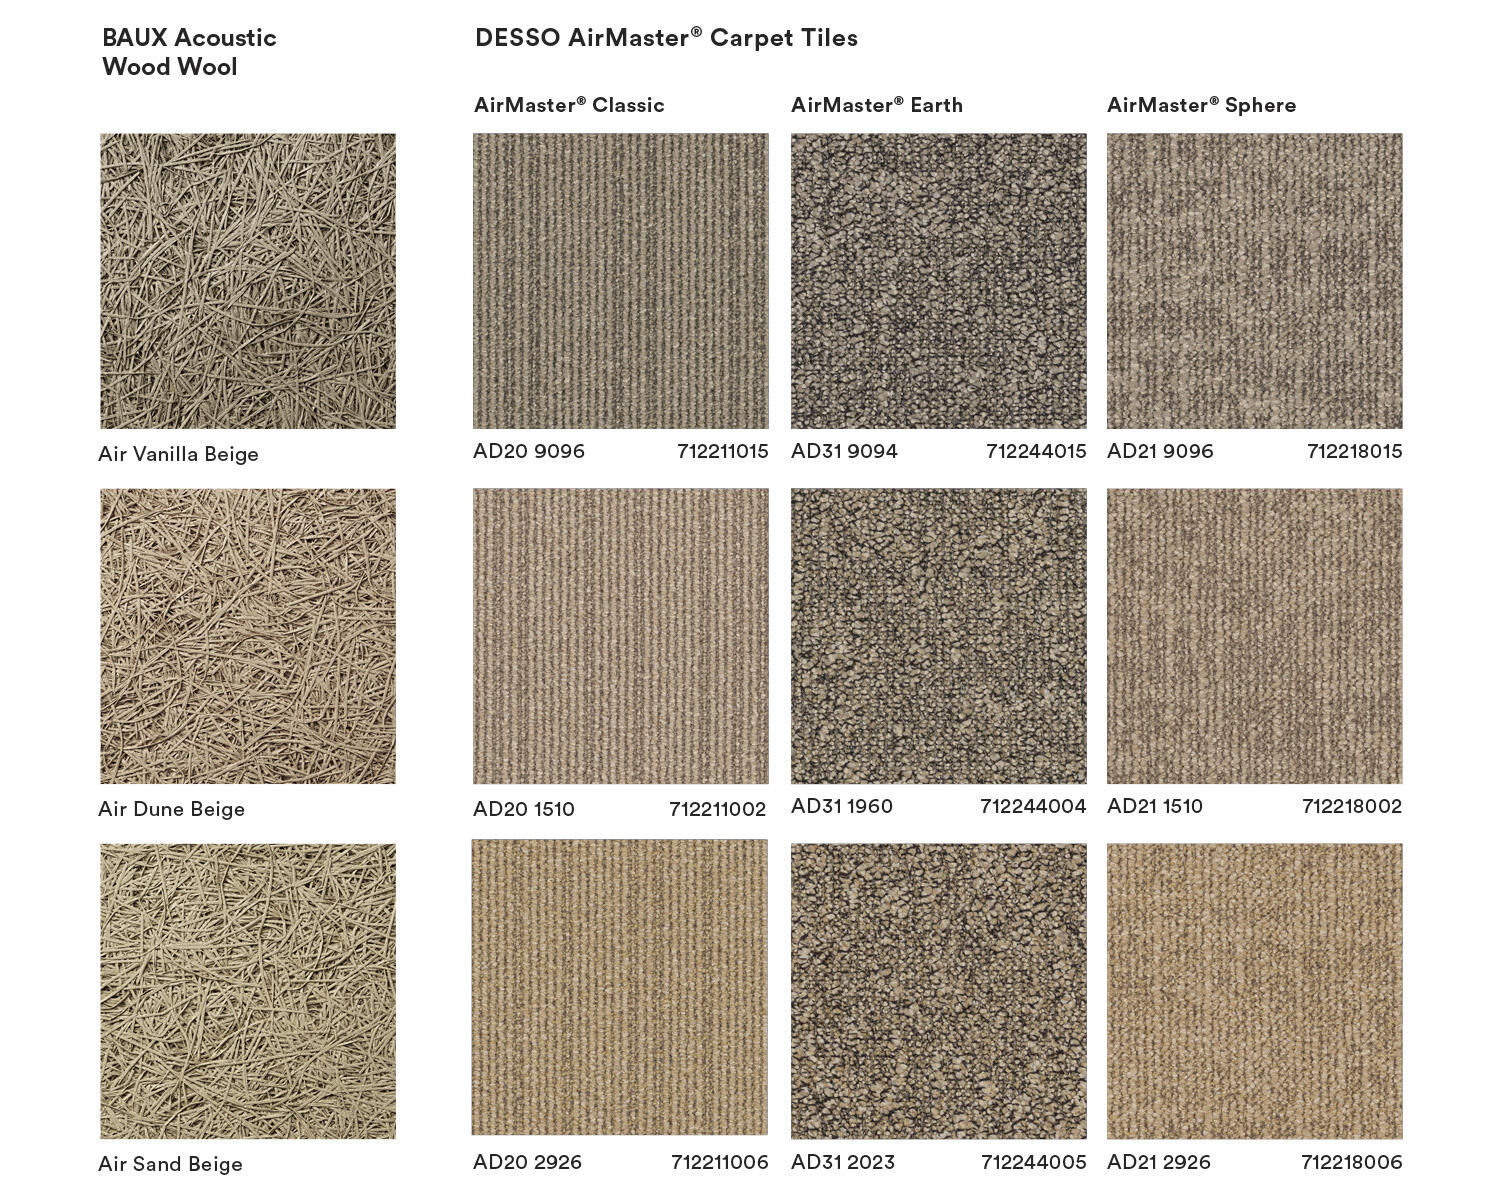 Colour range Minerals from the Tarkett DESSO carpet tiles and Baux acoustic panels collaboration